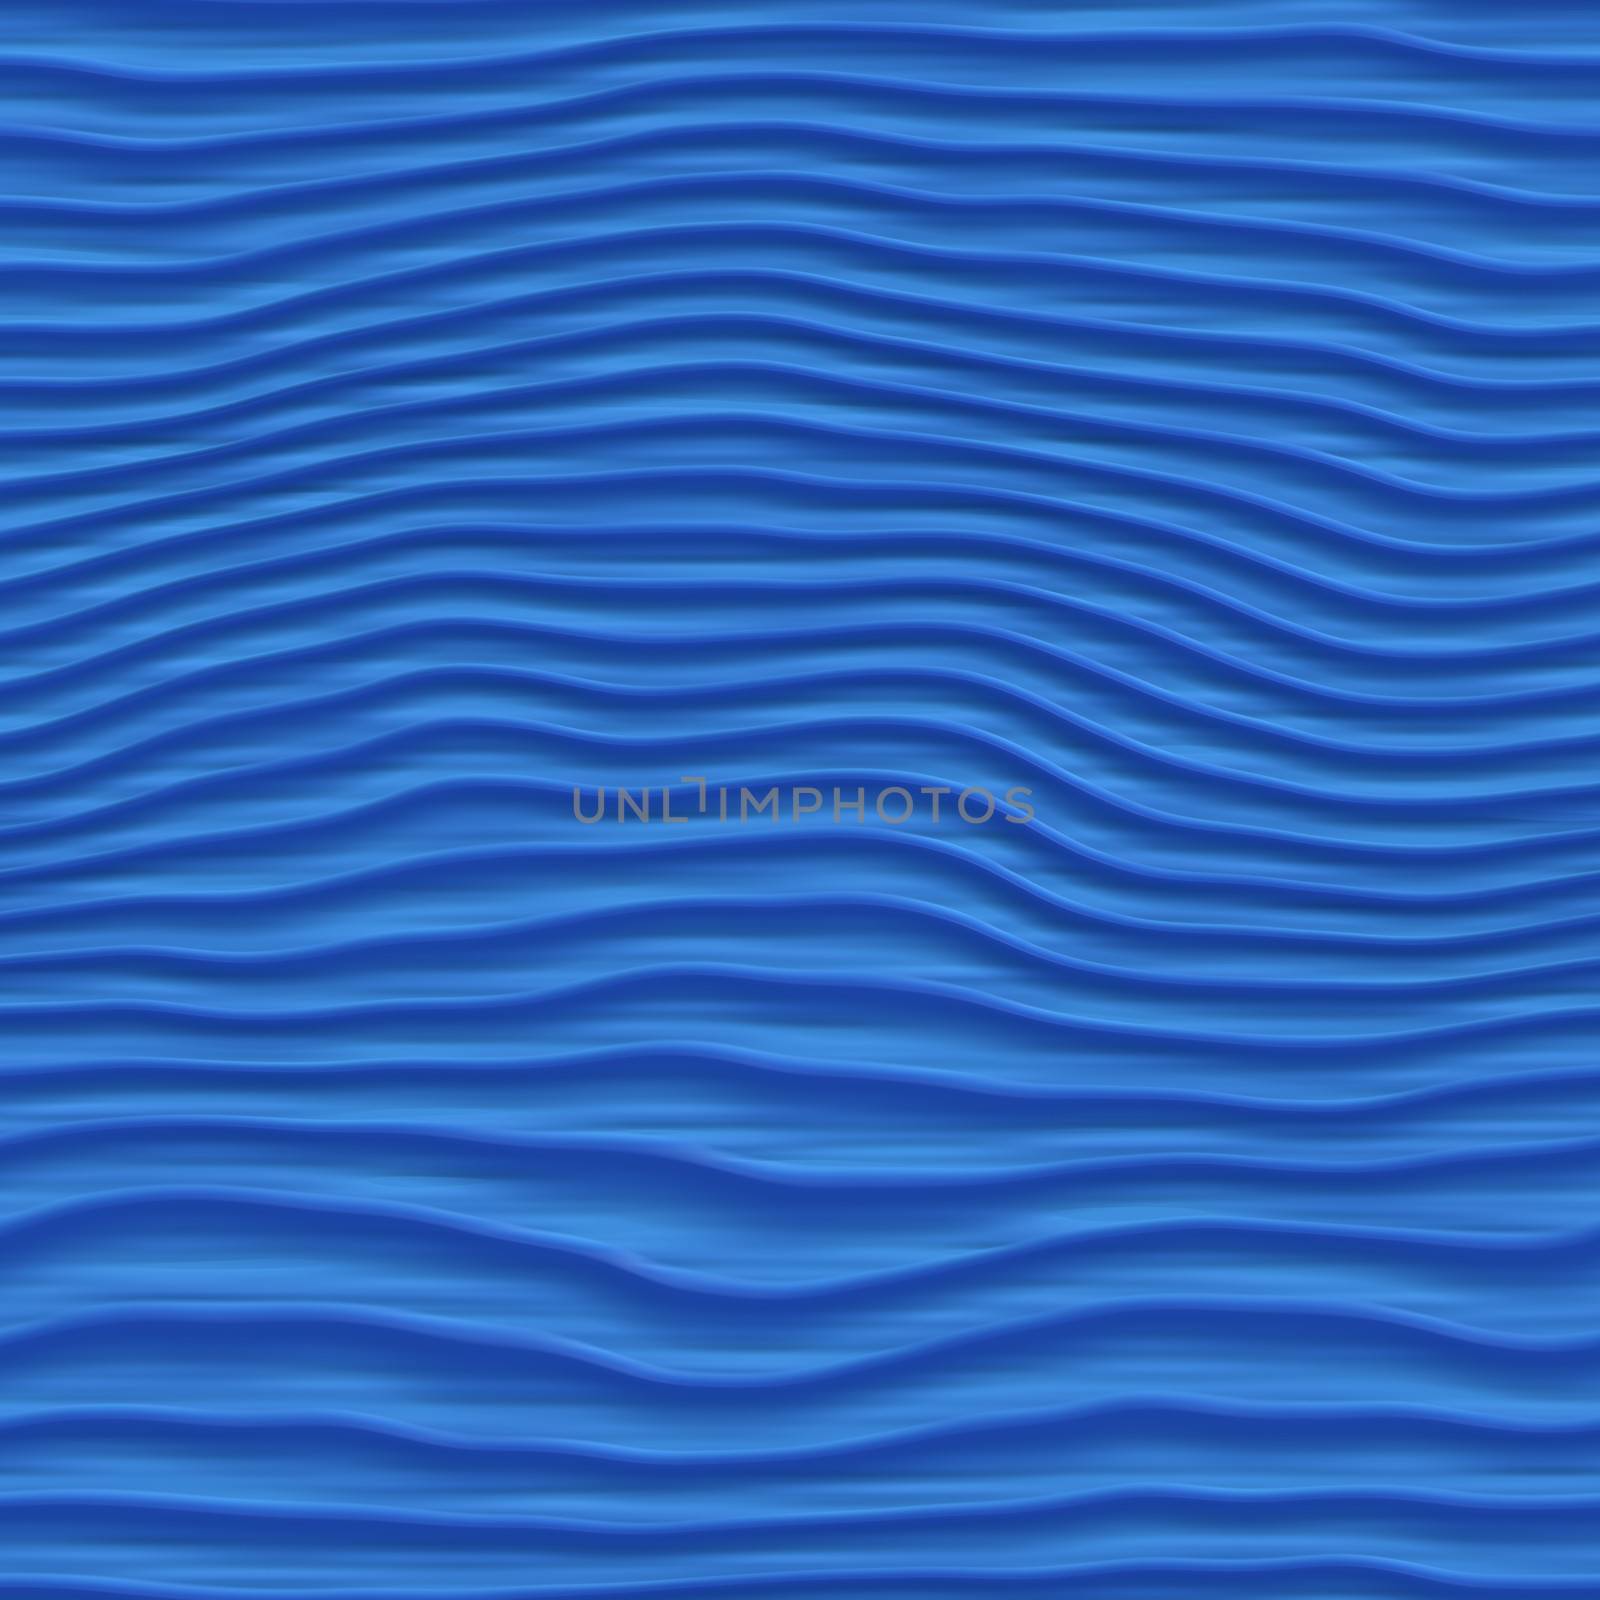 Seamless marine wave patterns by sfinks